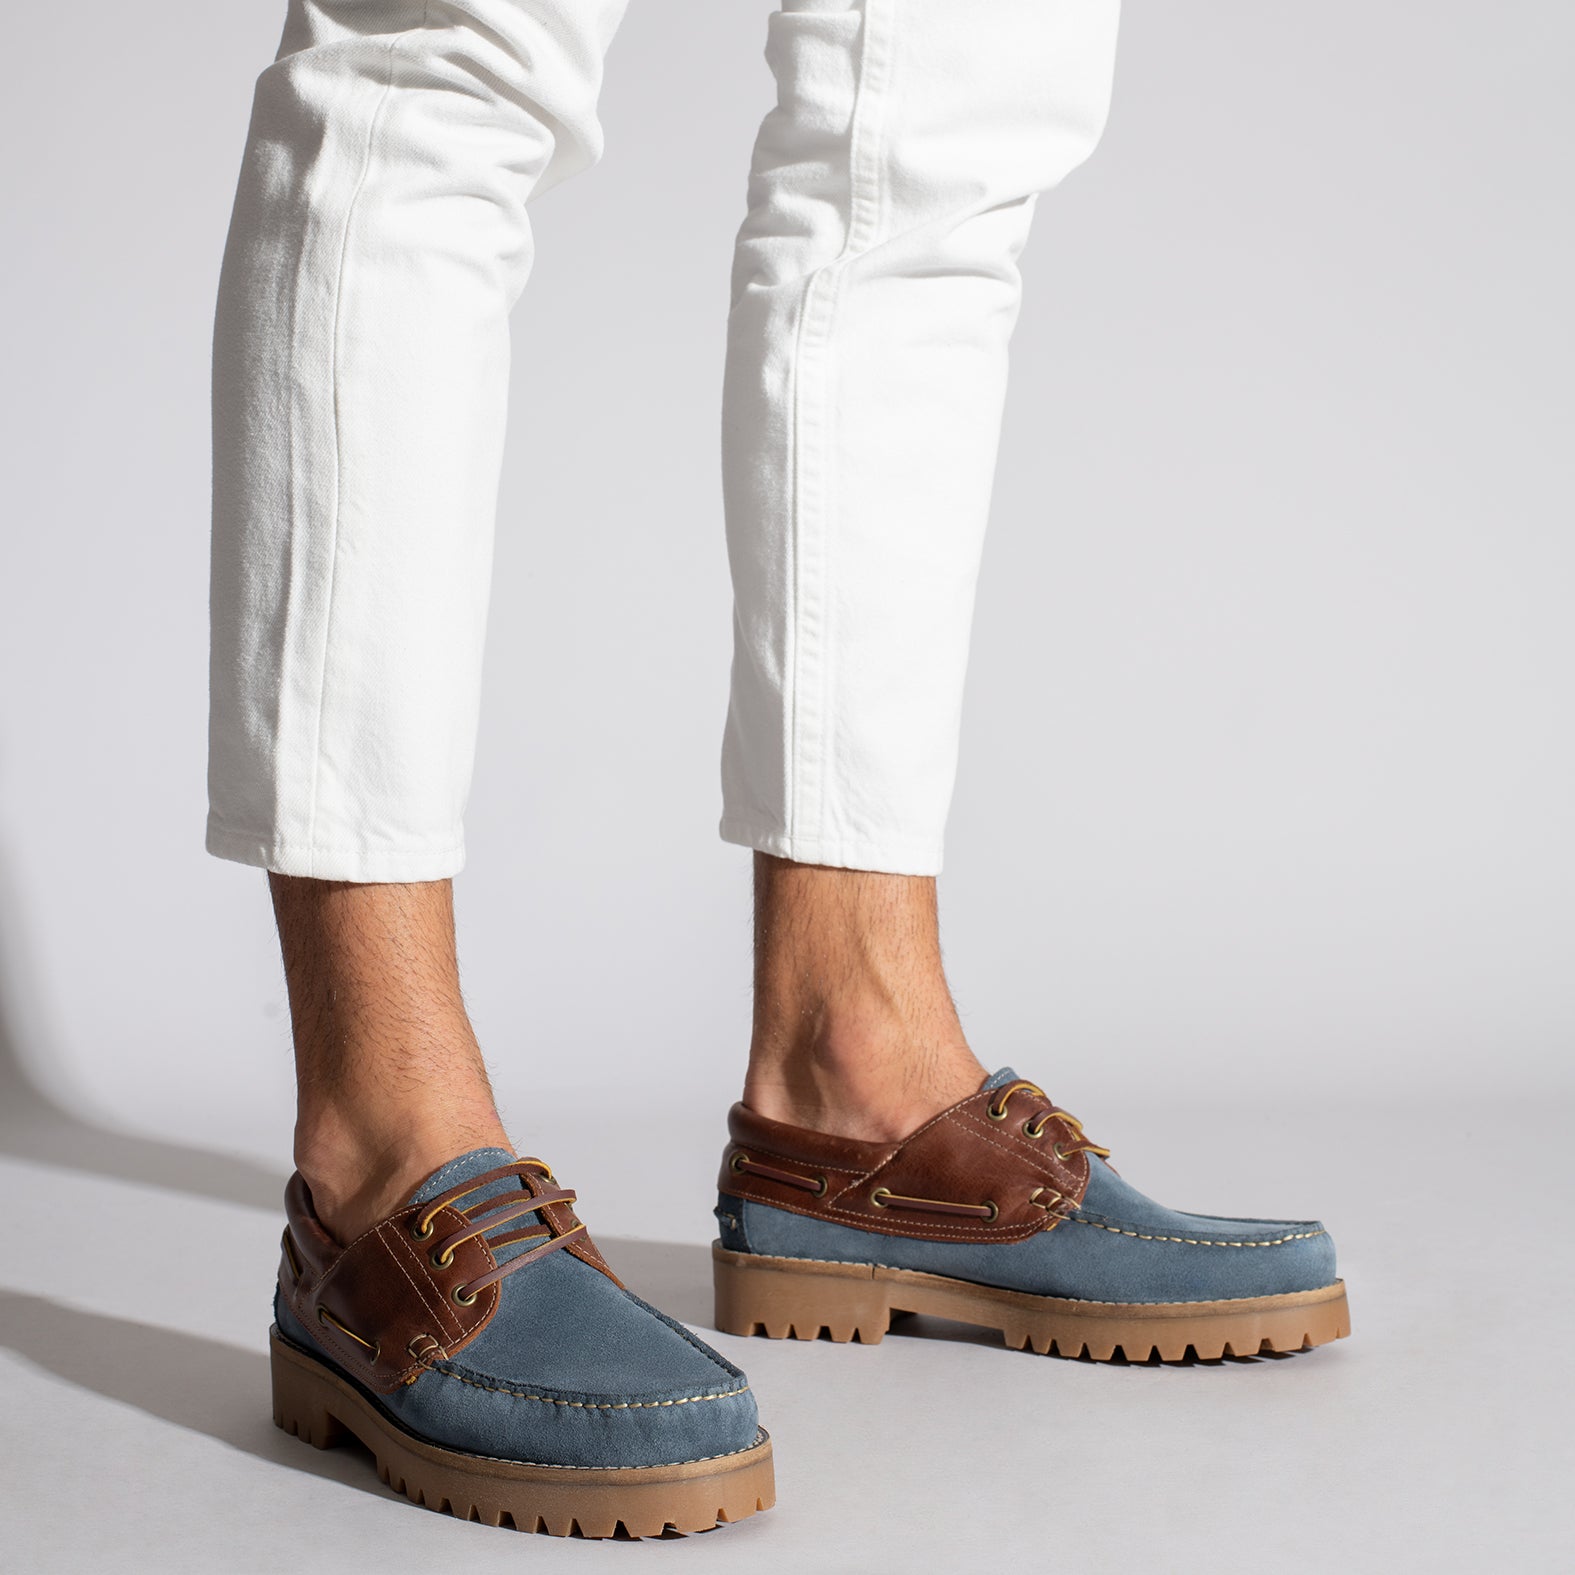 NAUTIC – BLUE boat shoes for men